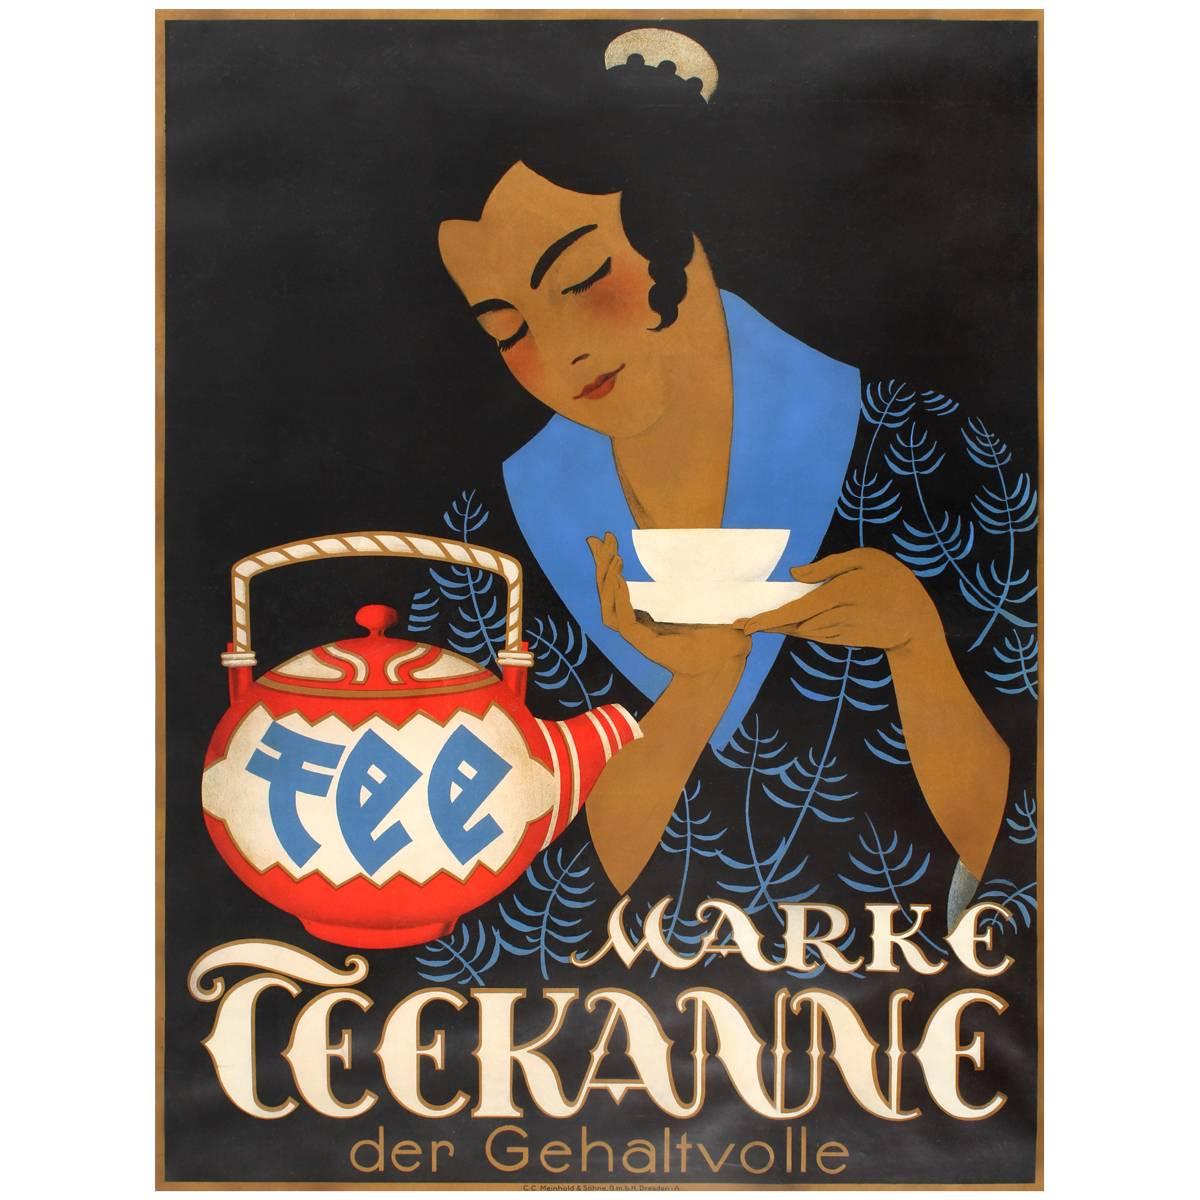 Original Vintage Drink Advertising Poster for Quality Brand Tea - Marke Teekanne